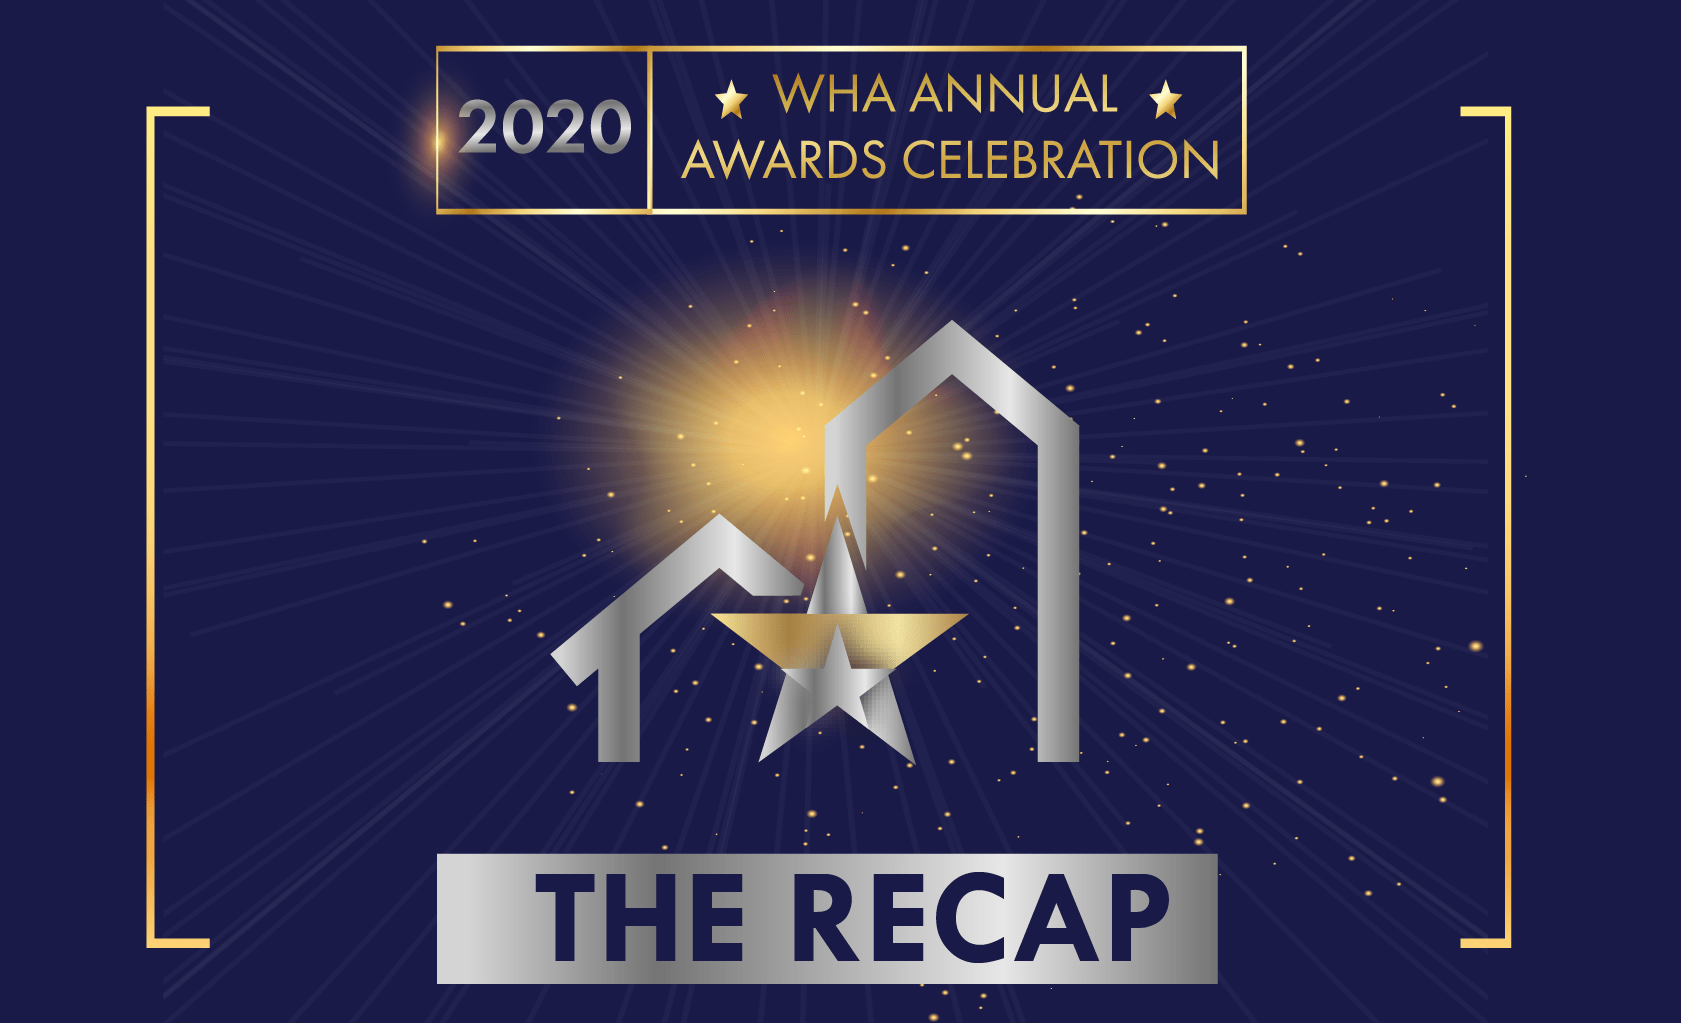 2020 WHA Annual Awards Celebration - The Recap